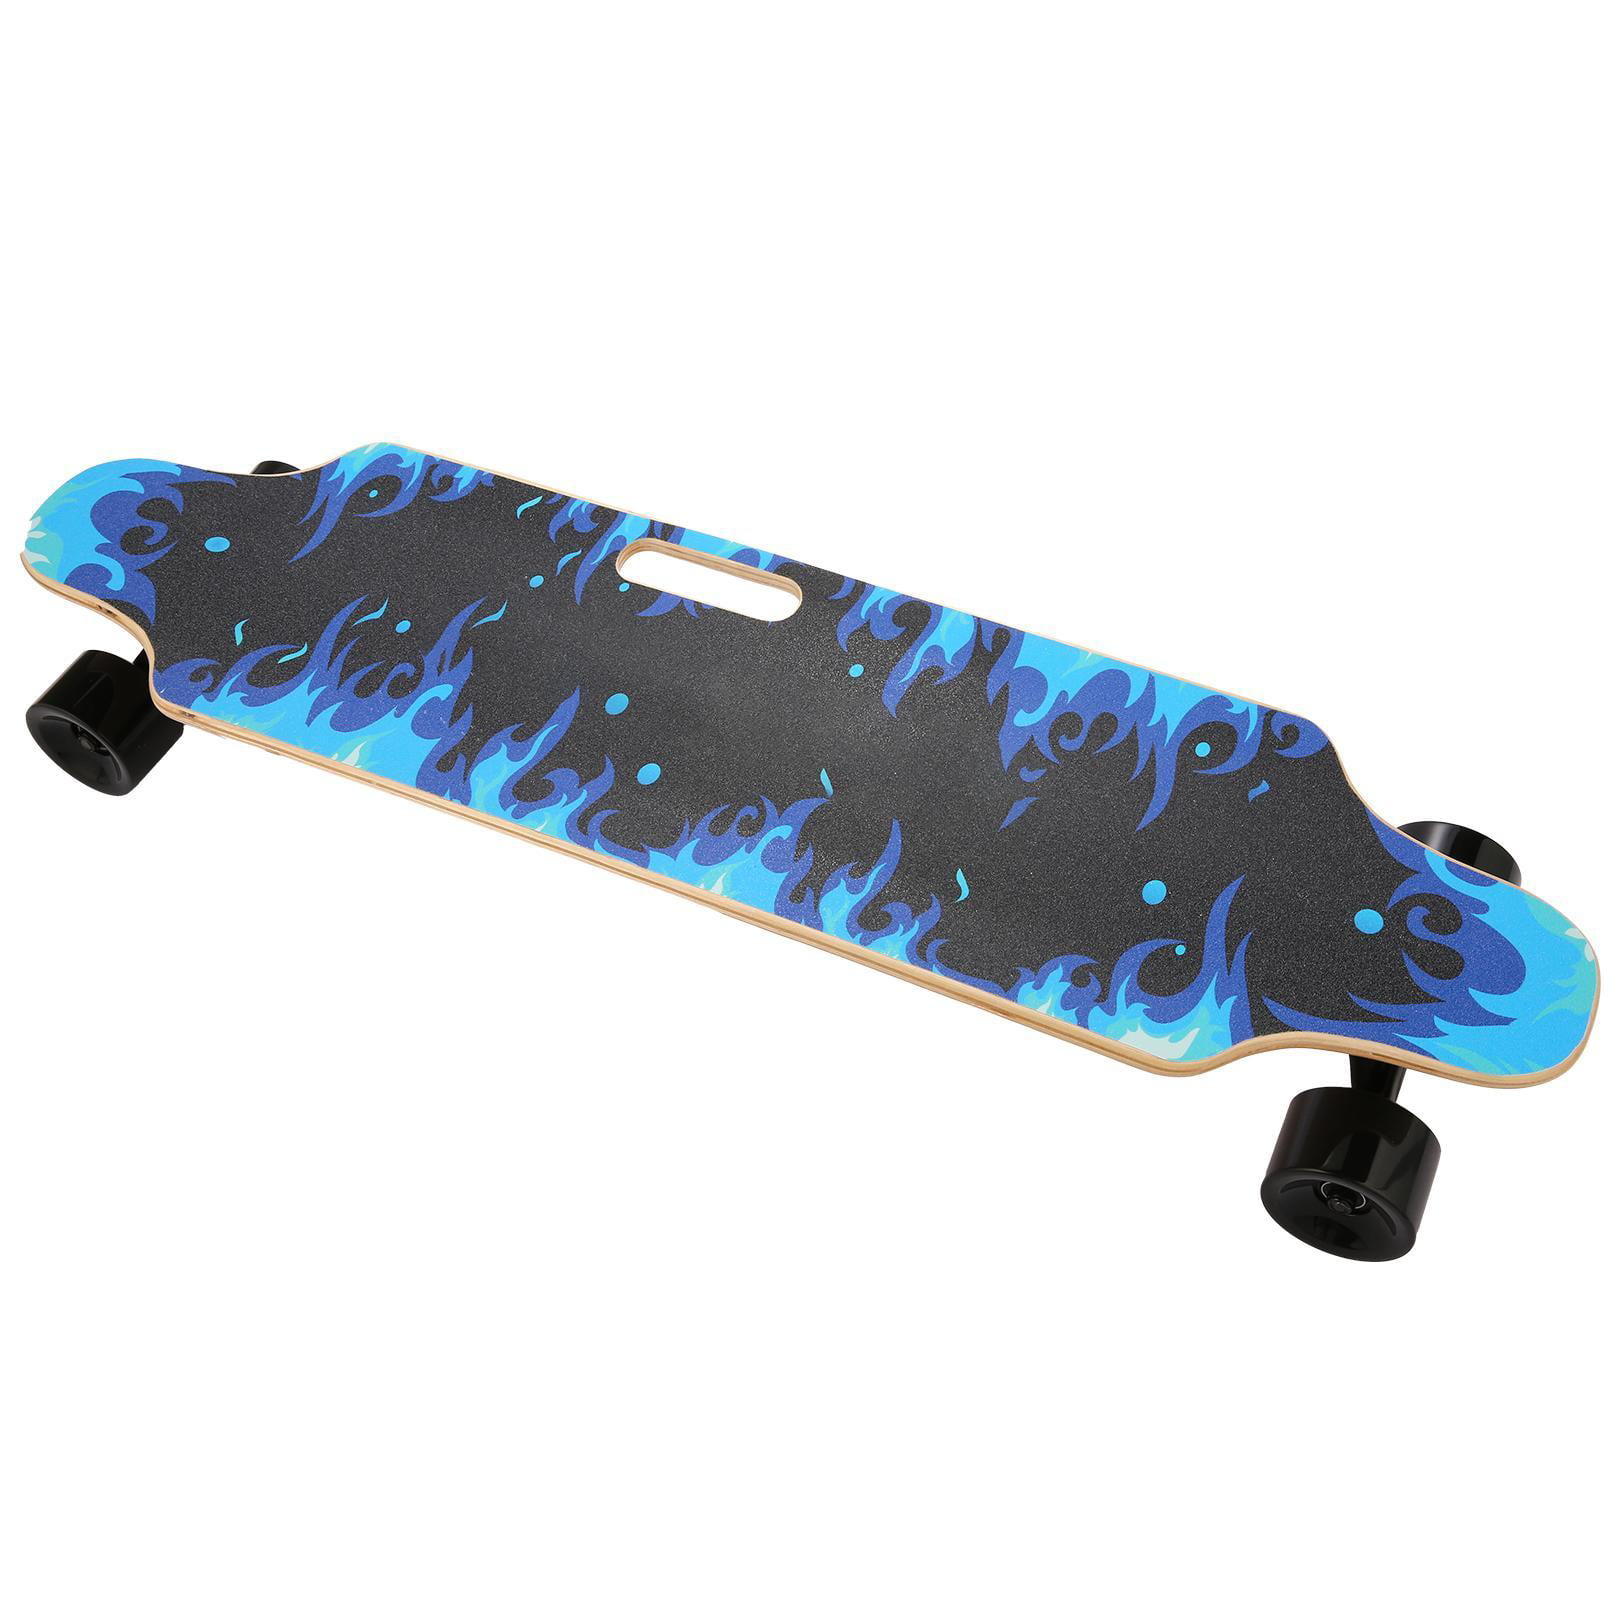 20km/h Electric Skateboard Skate Longboard Wireless Remote Control USB Bluetooth 